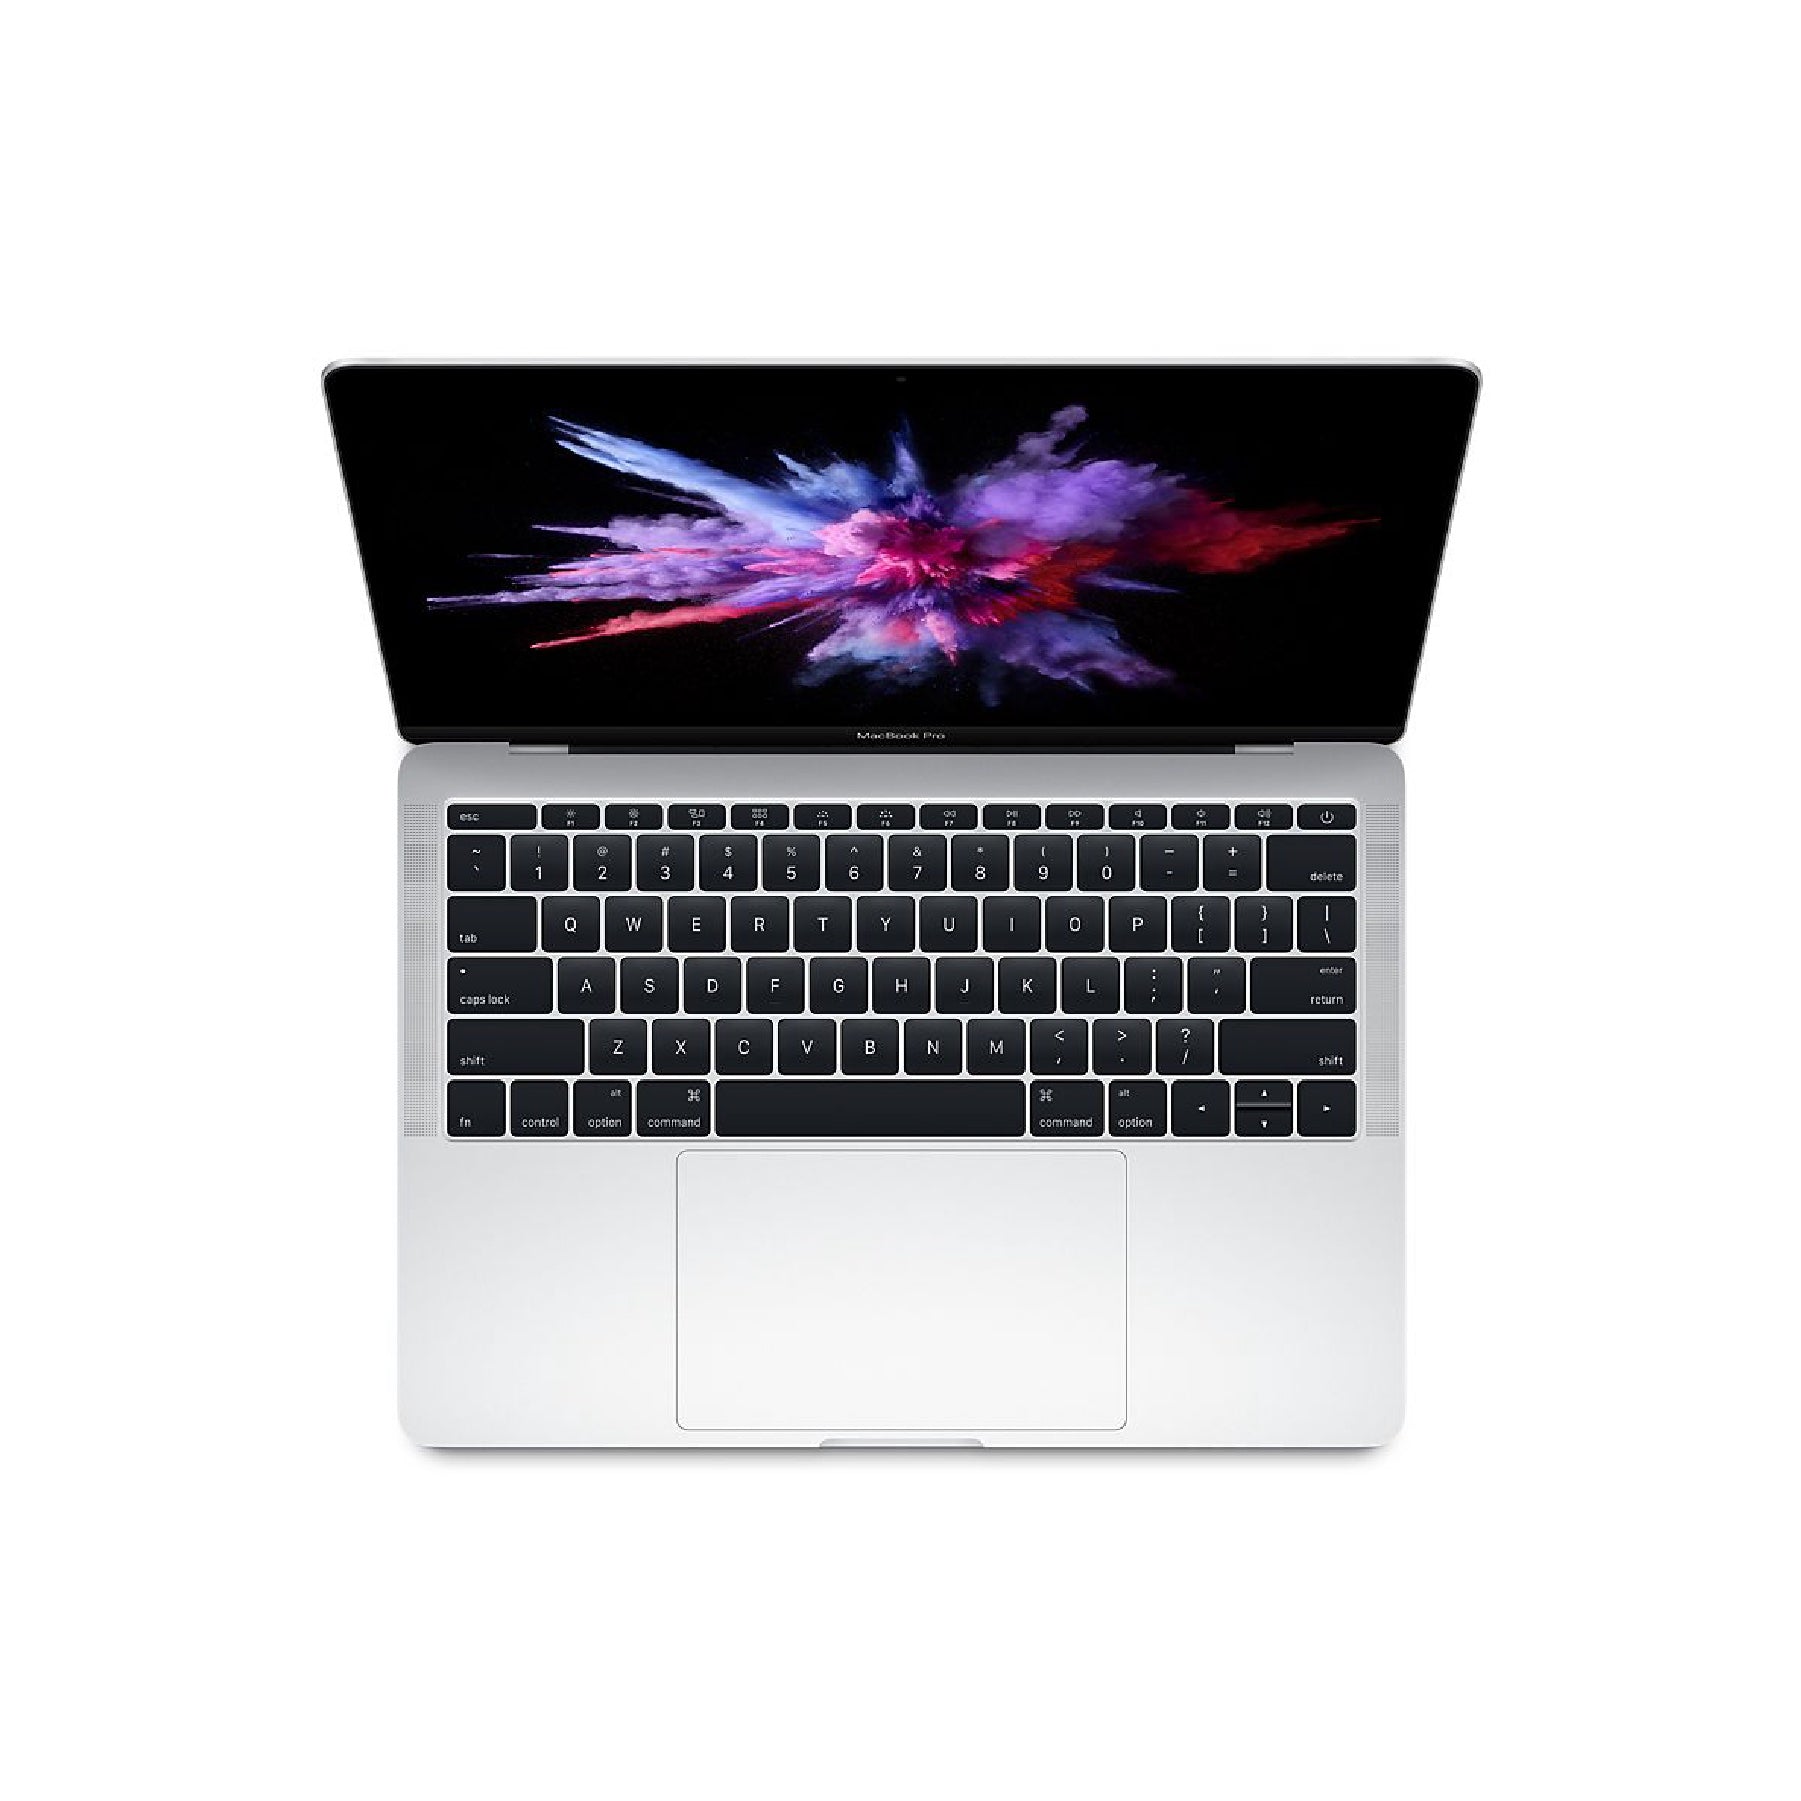 MacBookPro 2017 Two Thunderbolt ports